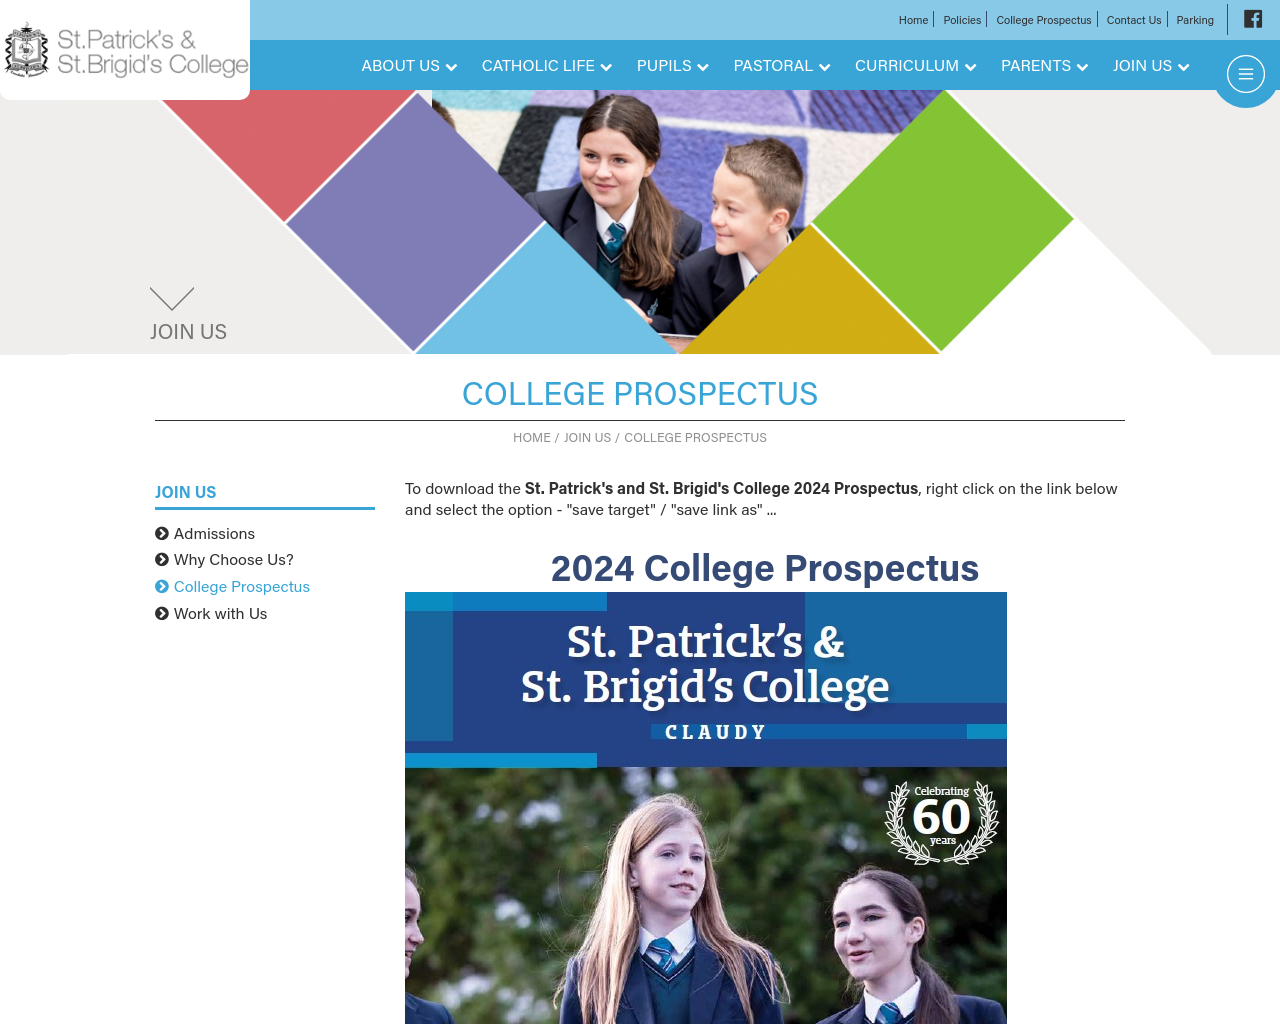 St. Patrick's and St. Brigid's College Prospectus